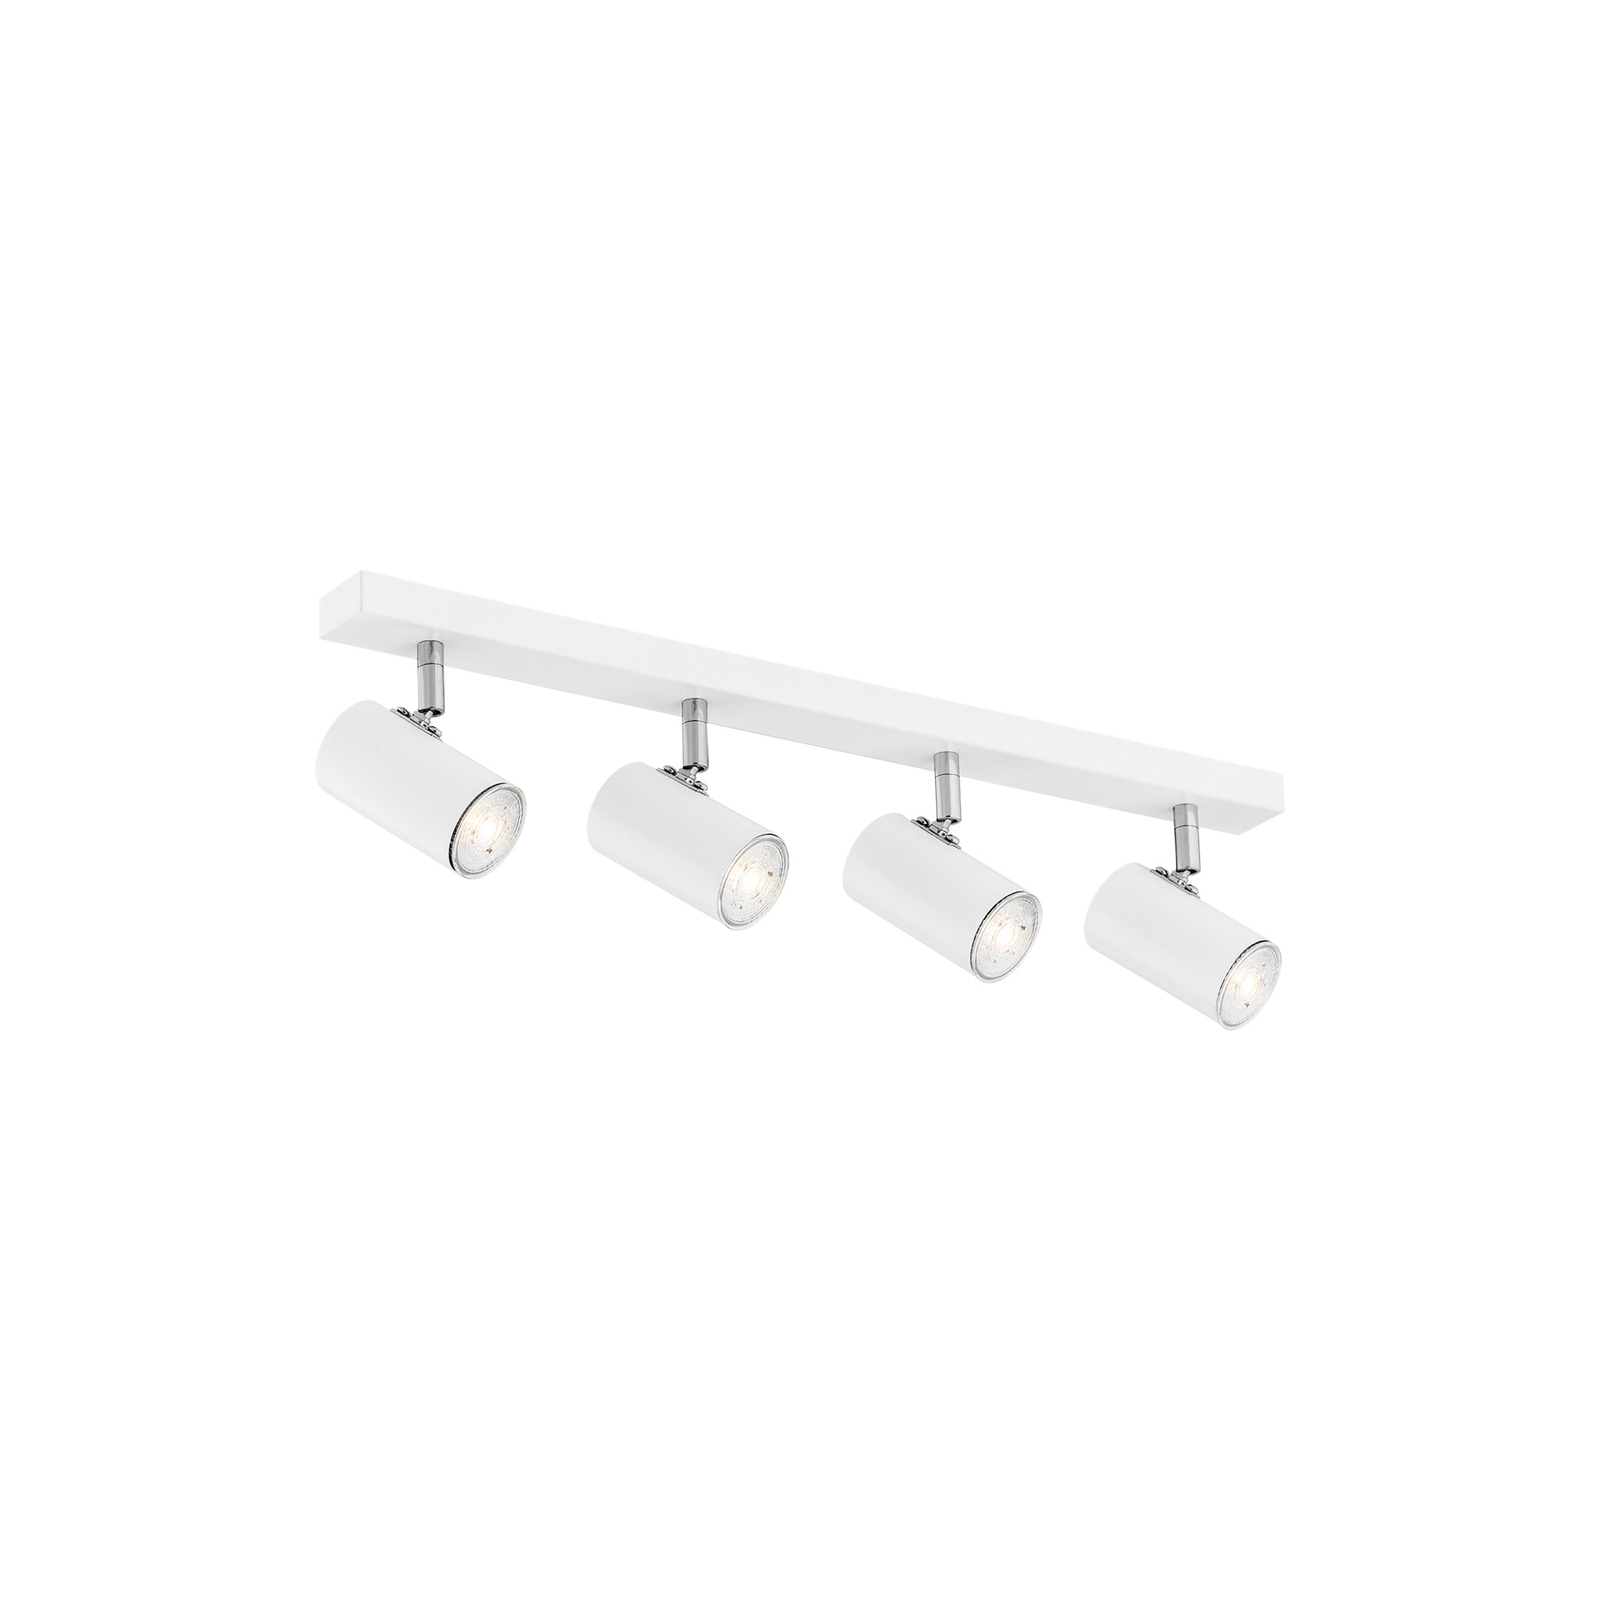 Tag downlight, white/chrome-coloured, steel, 4-bulb